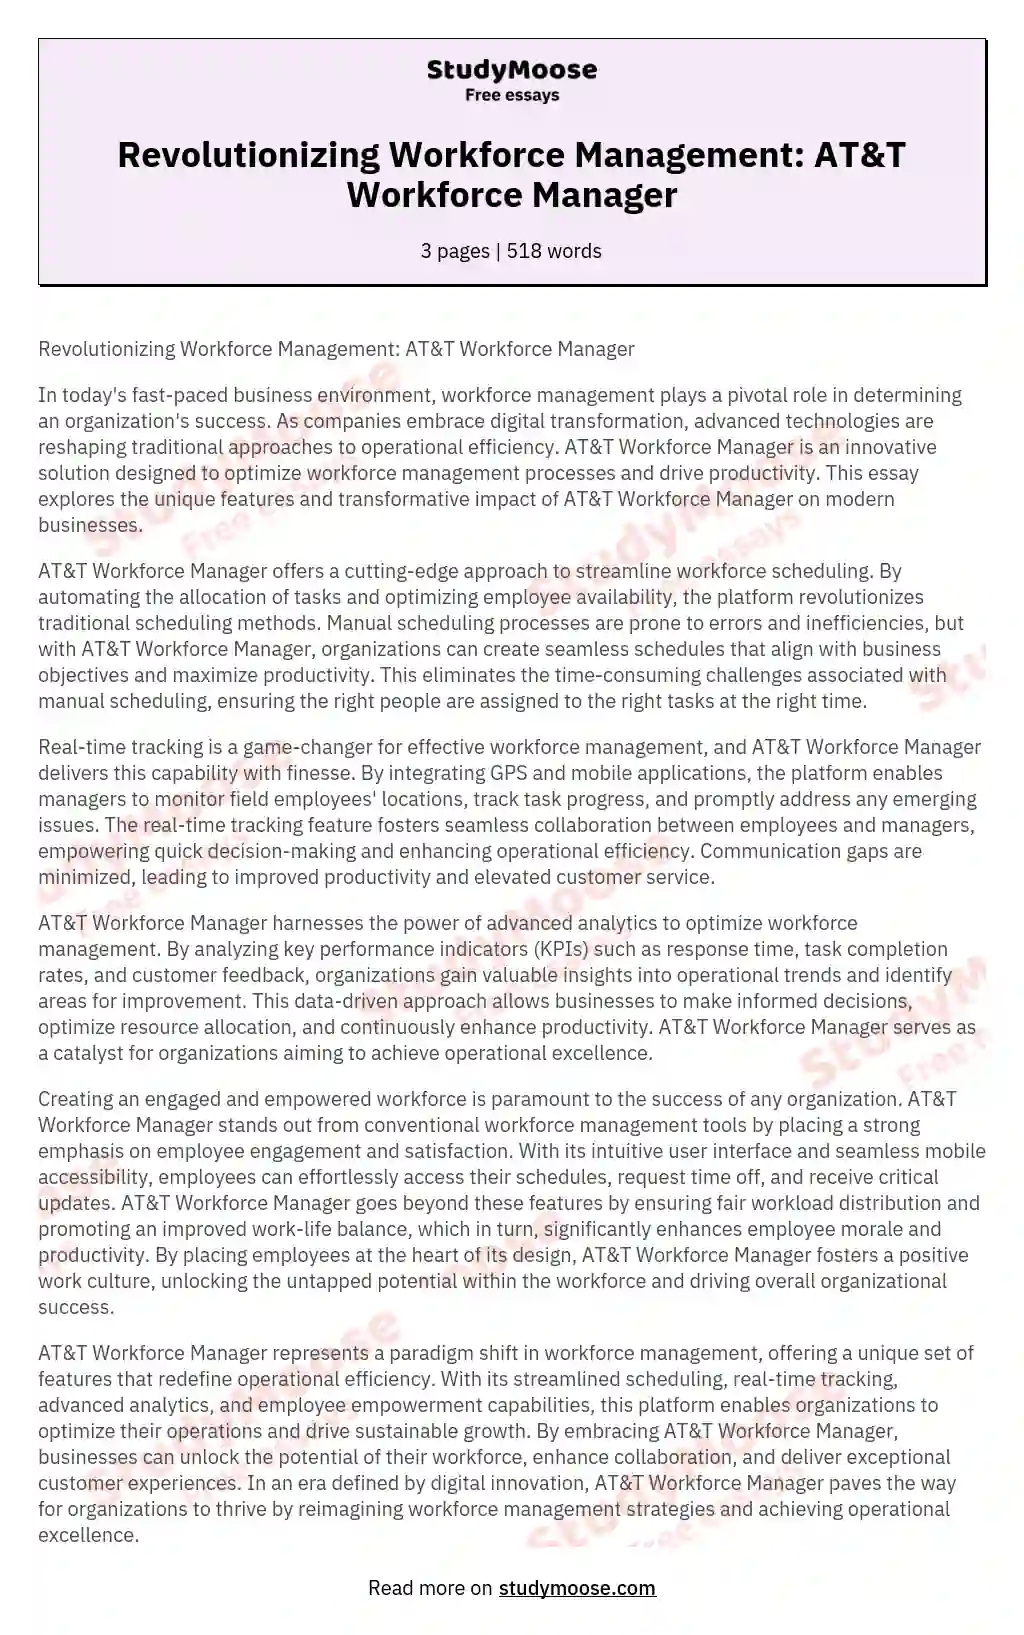 Revolutionizing Workforce Management: AT&T Workforce Manager essay